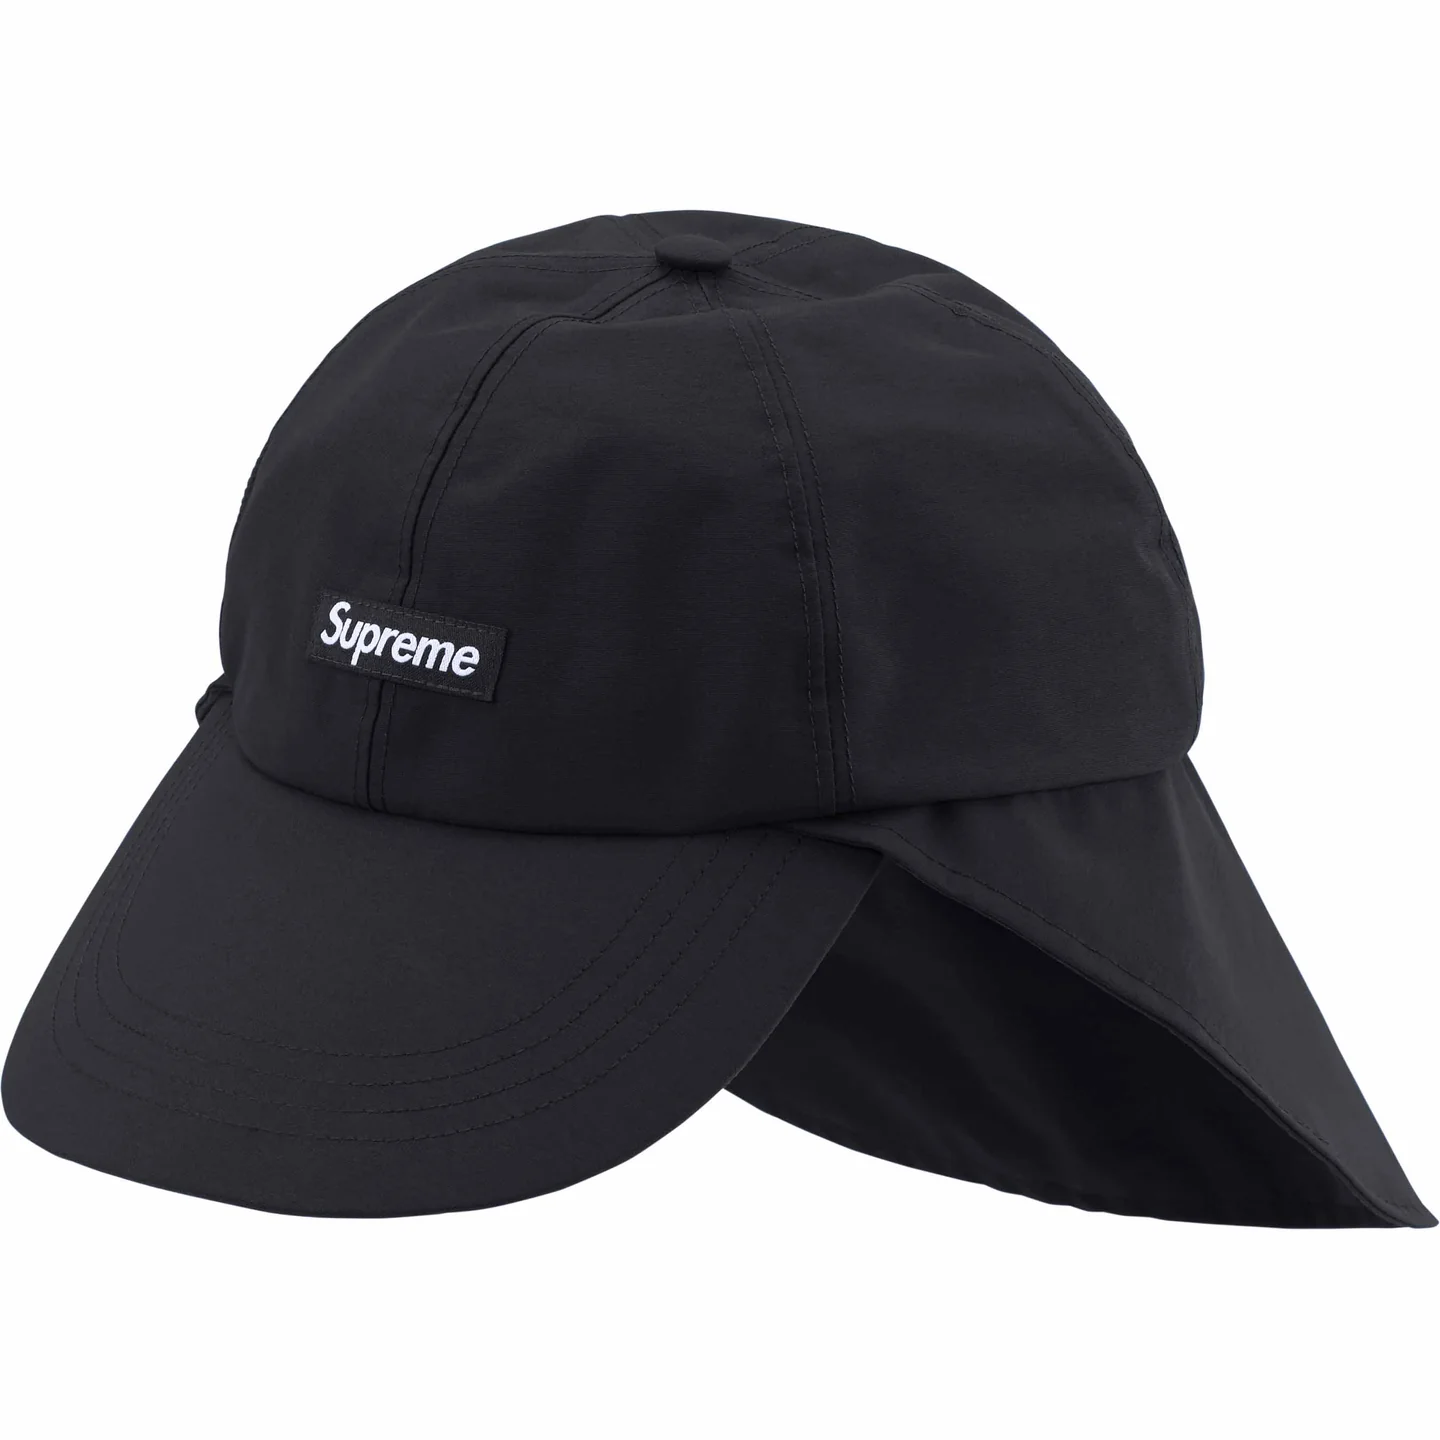 GORE-TEX Sunshield Hat | Supreme 24ss